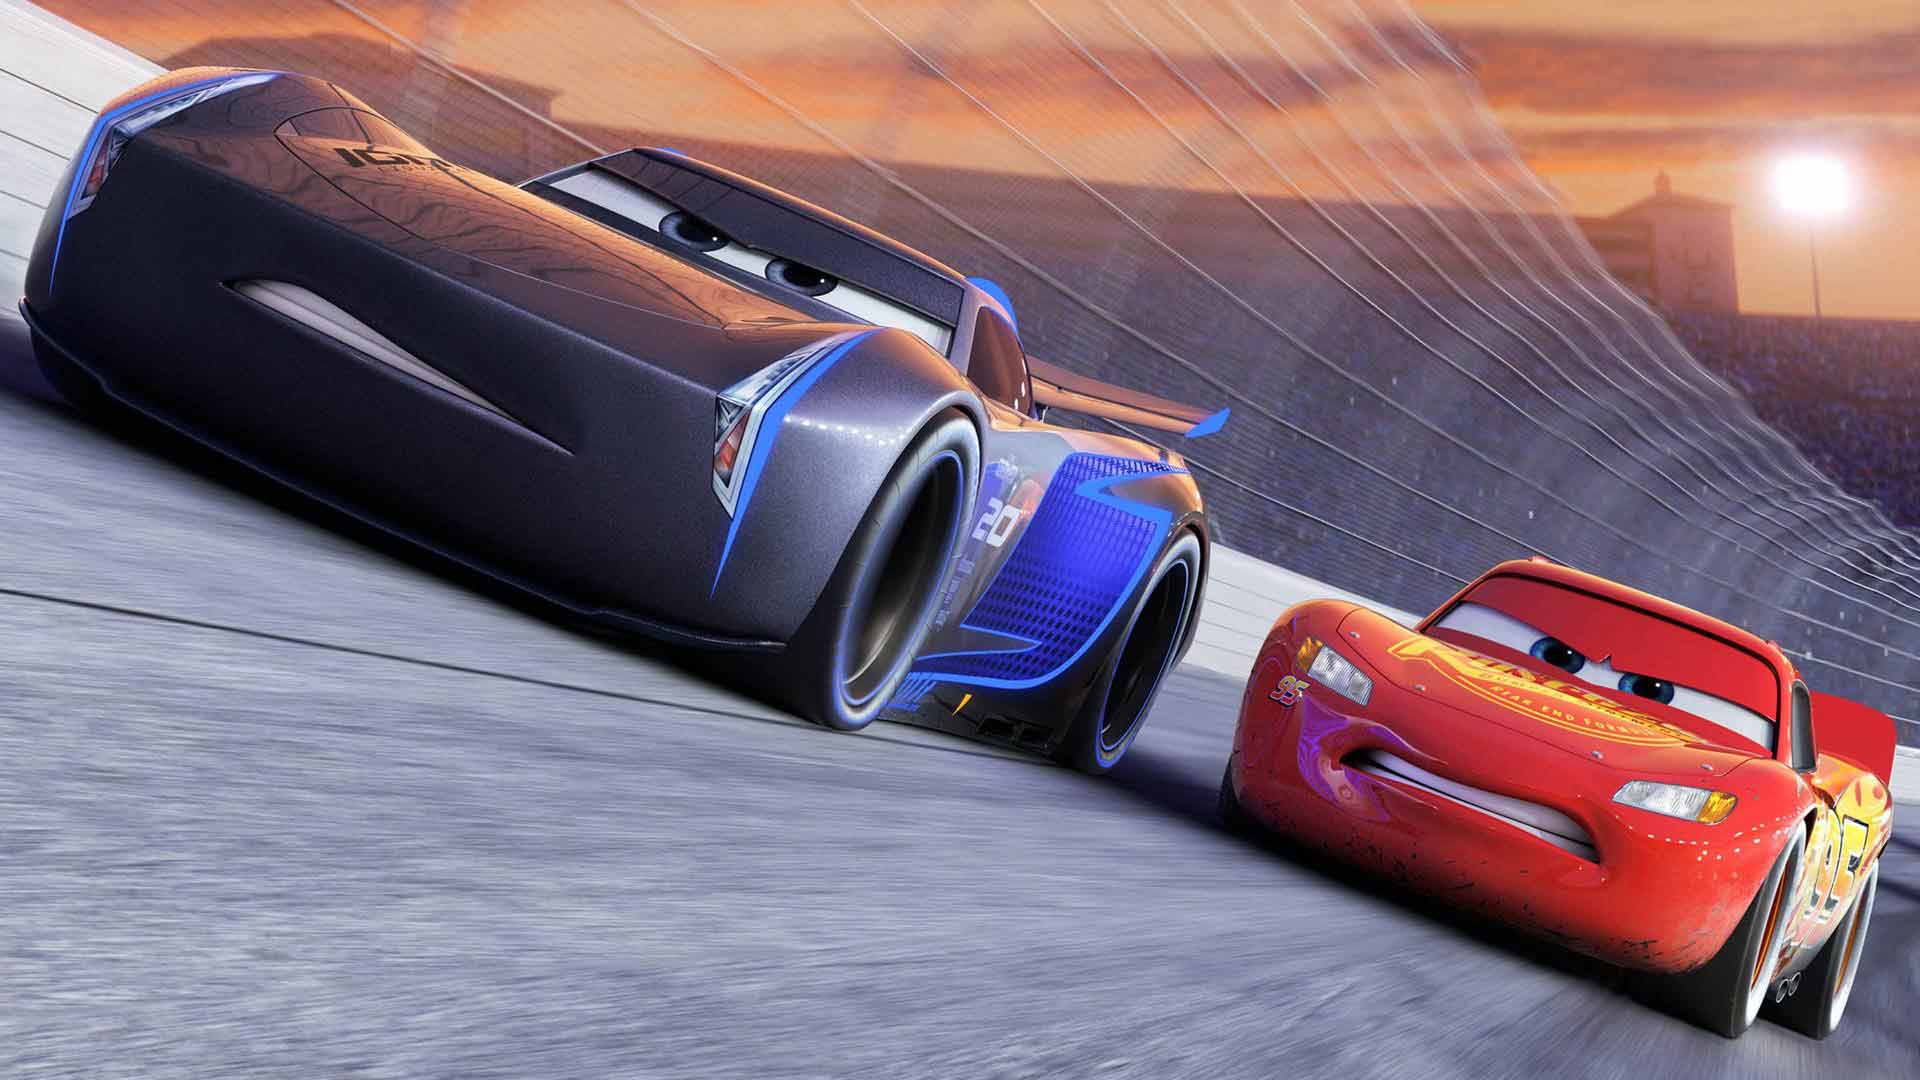 McQueen racing in car animation